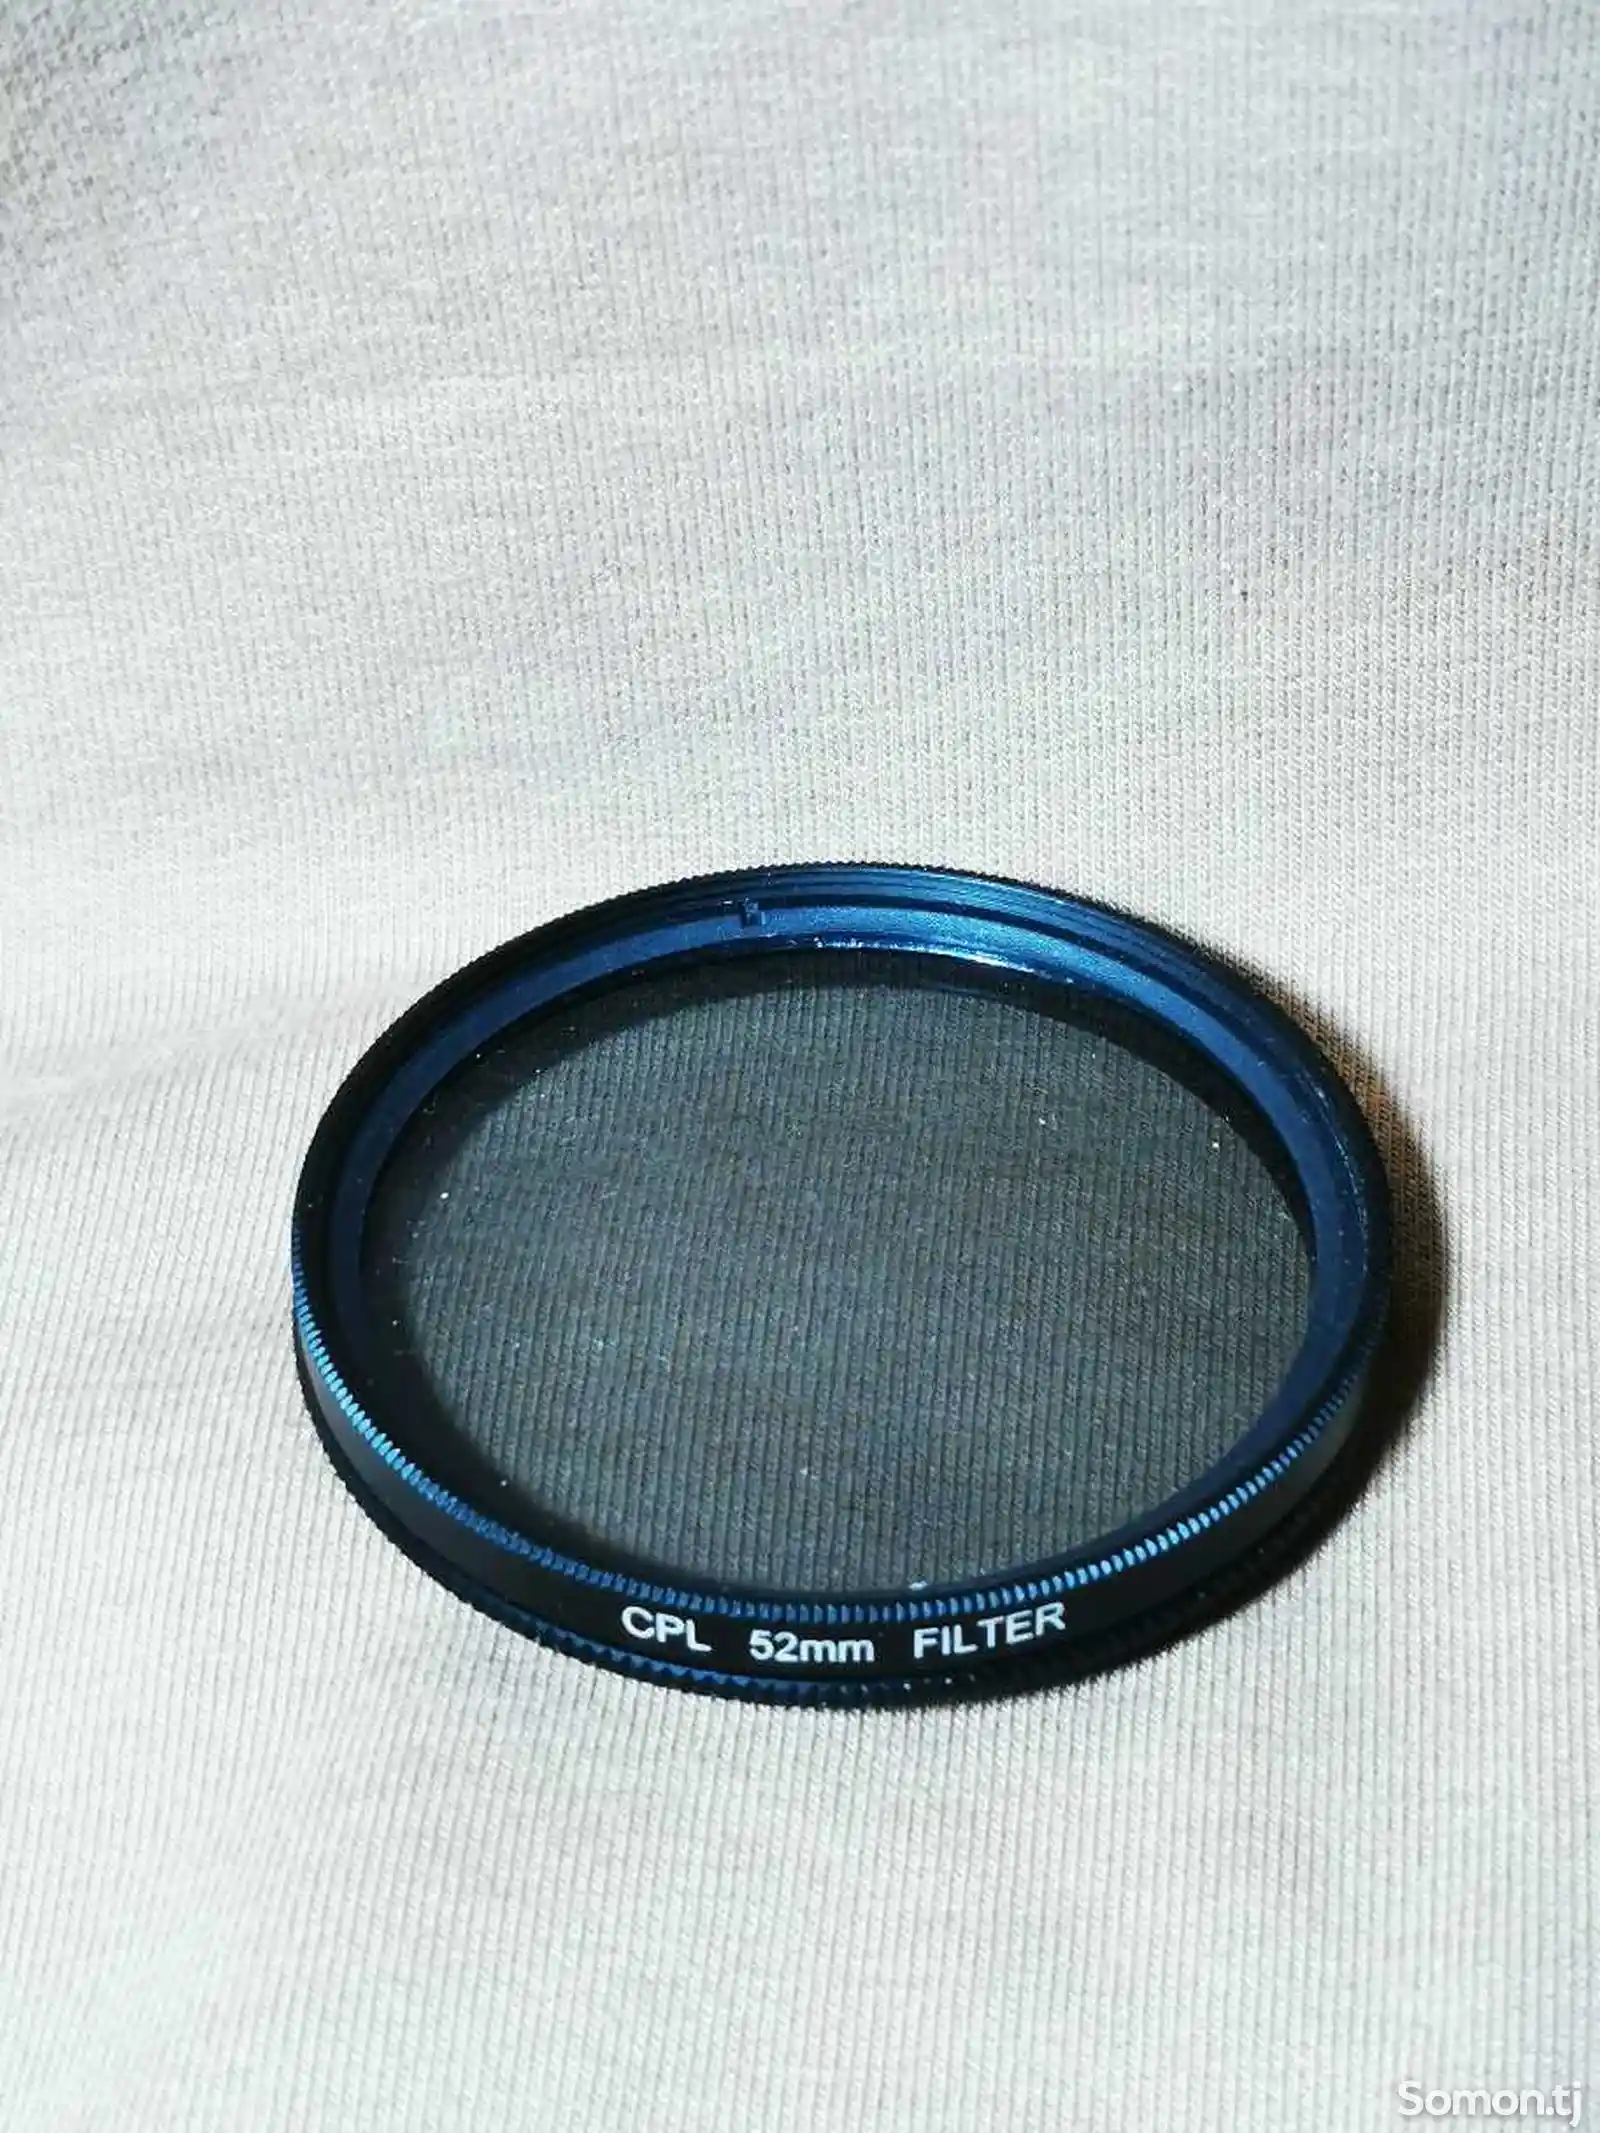 Фильтр для объектива Cpl 52mm Filter-2